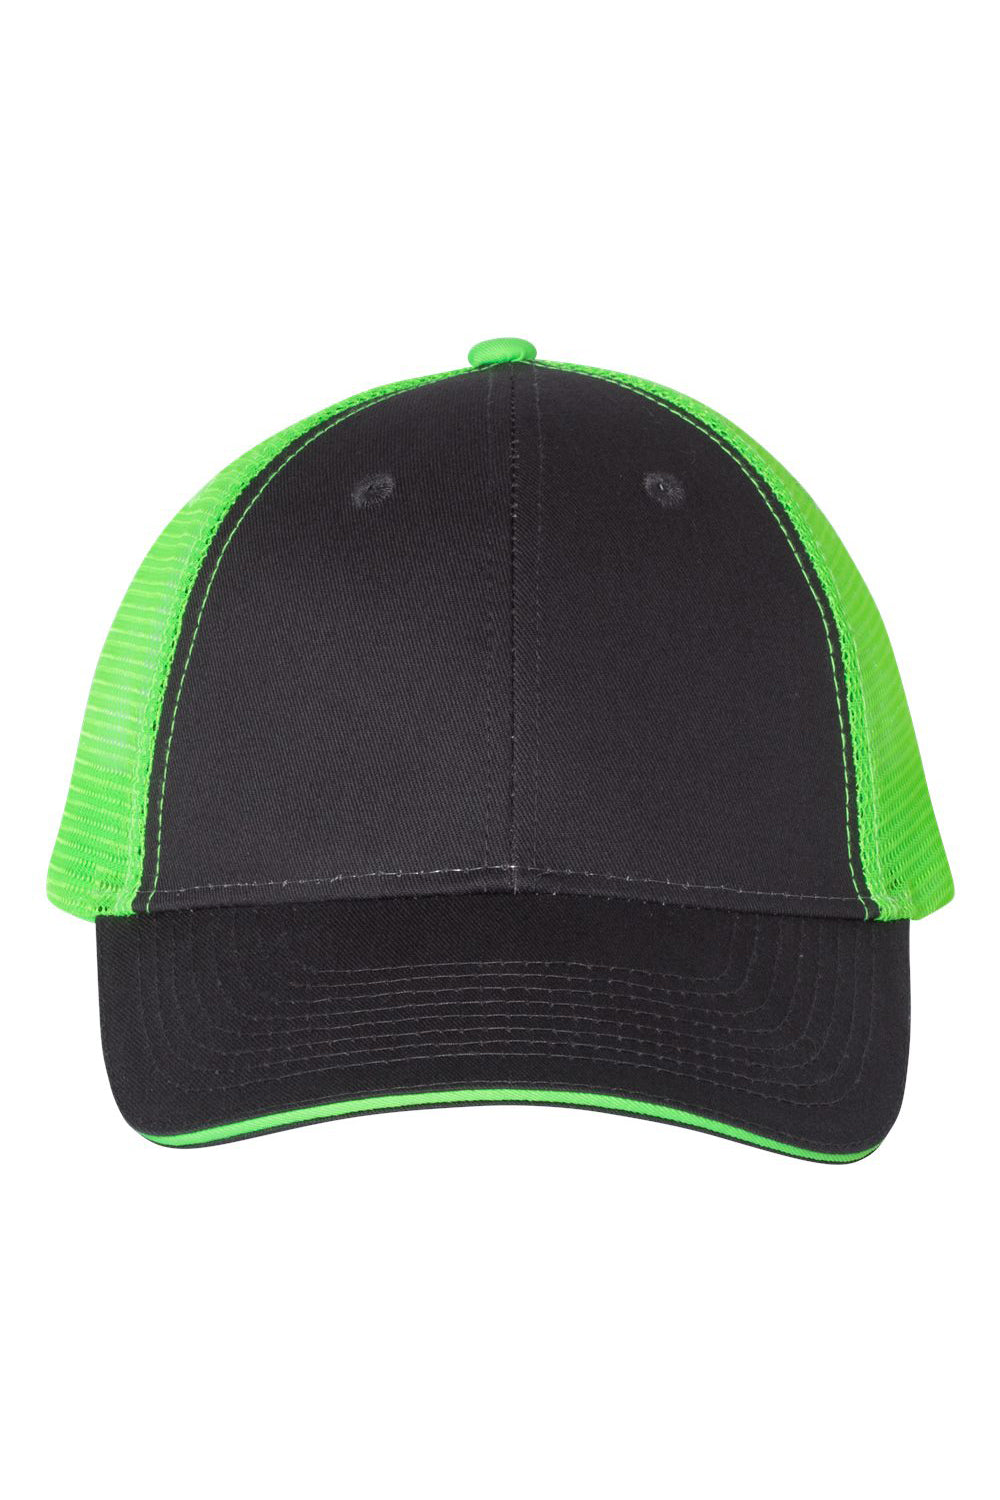 Valucap S102 Mens Sandwich Trucker Hat Charcoal Grey/Neon Green Flat Front